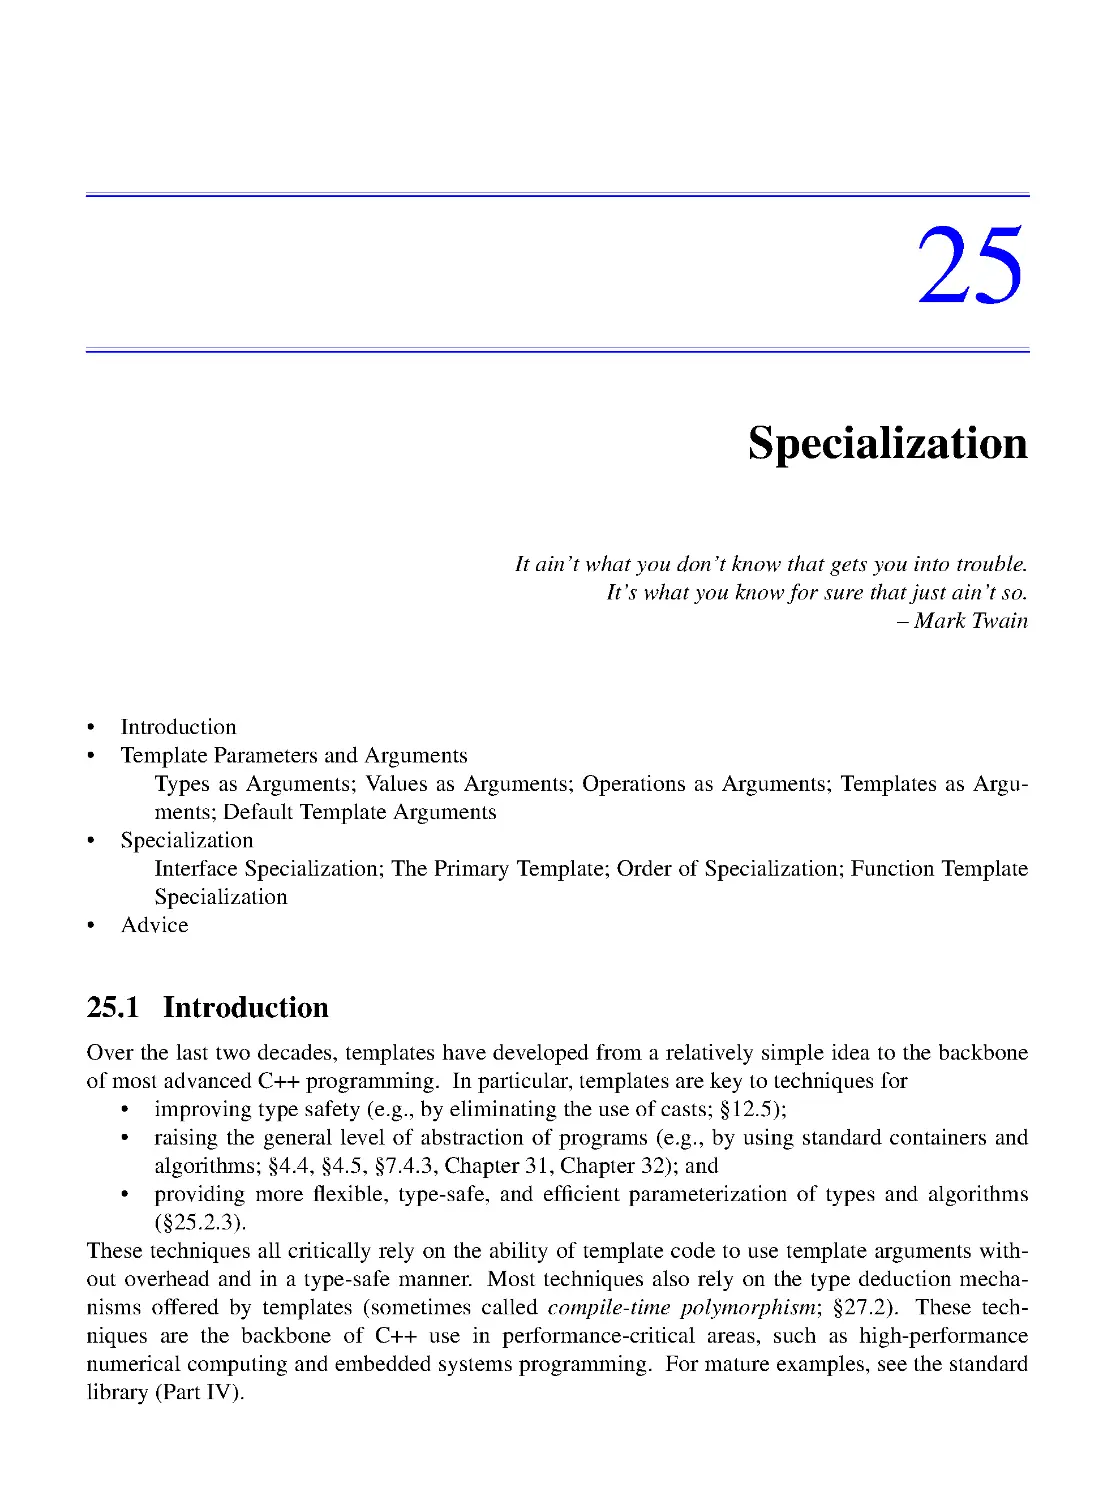 25. Specialization